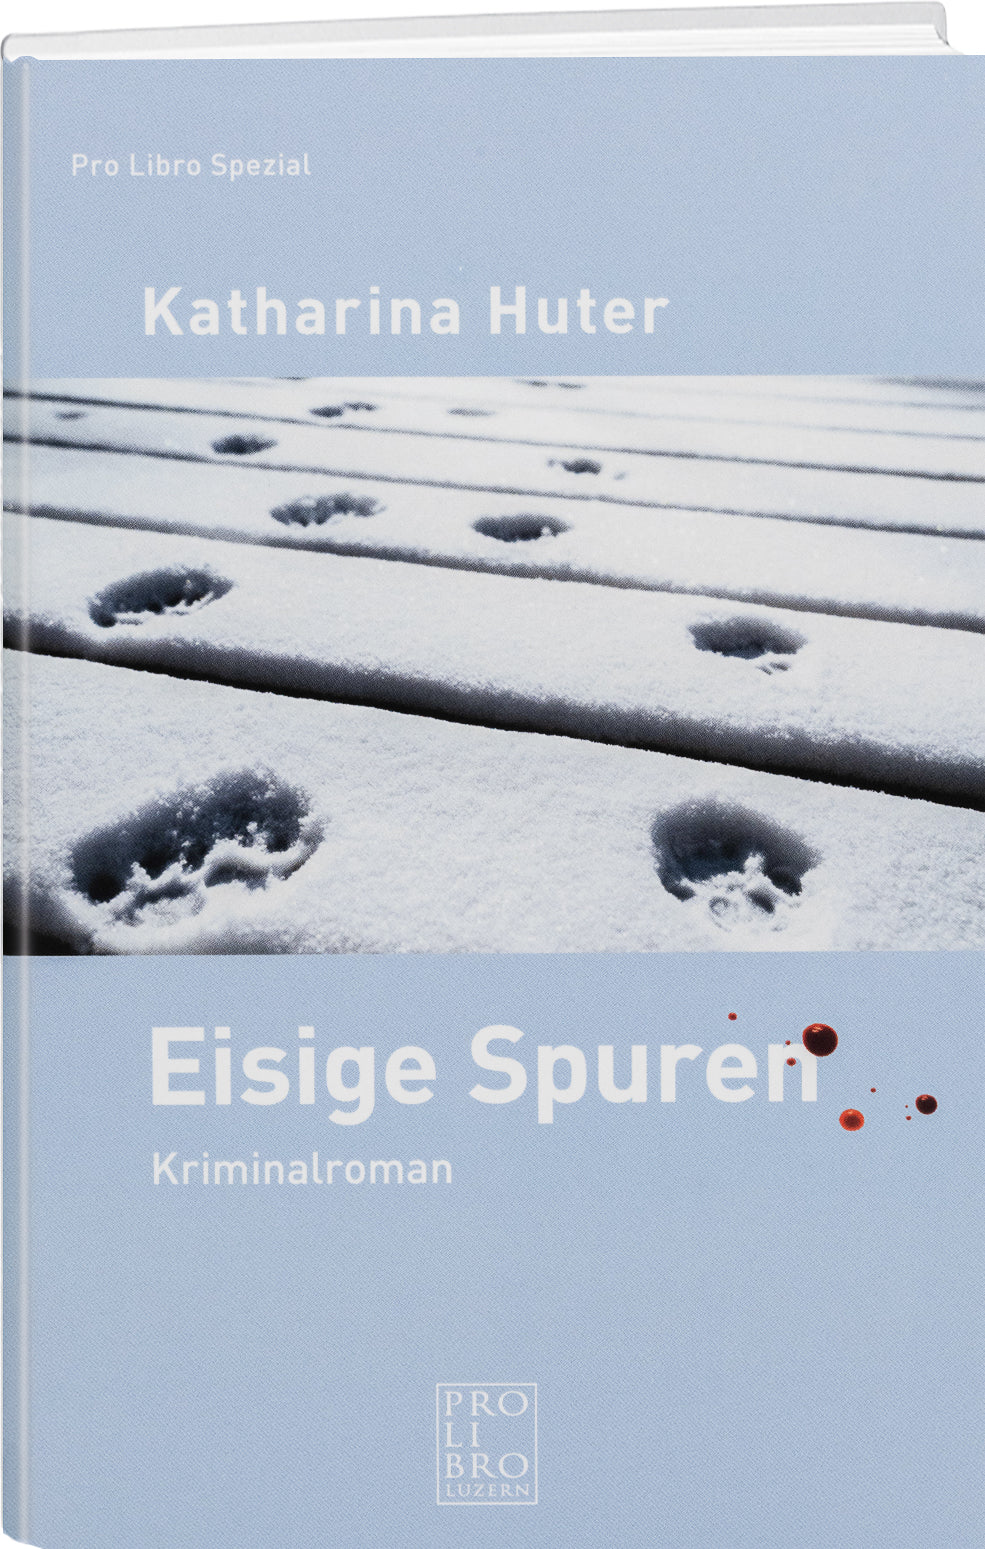 Katharina Huter: Eisige Spuren - prolibro.ch